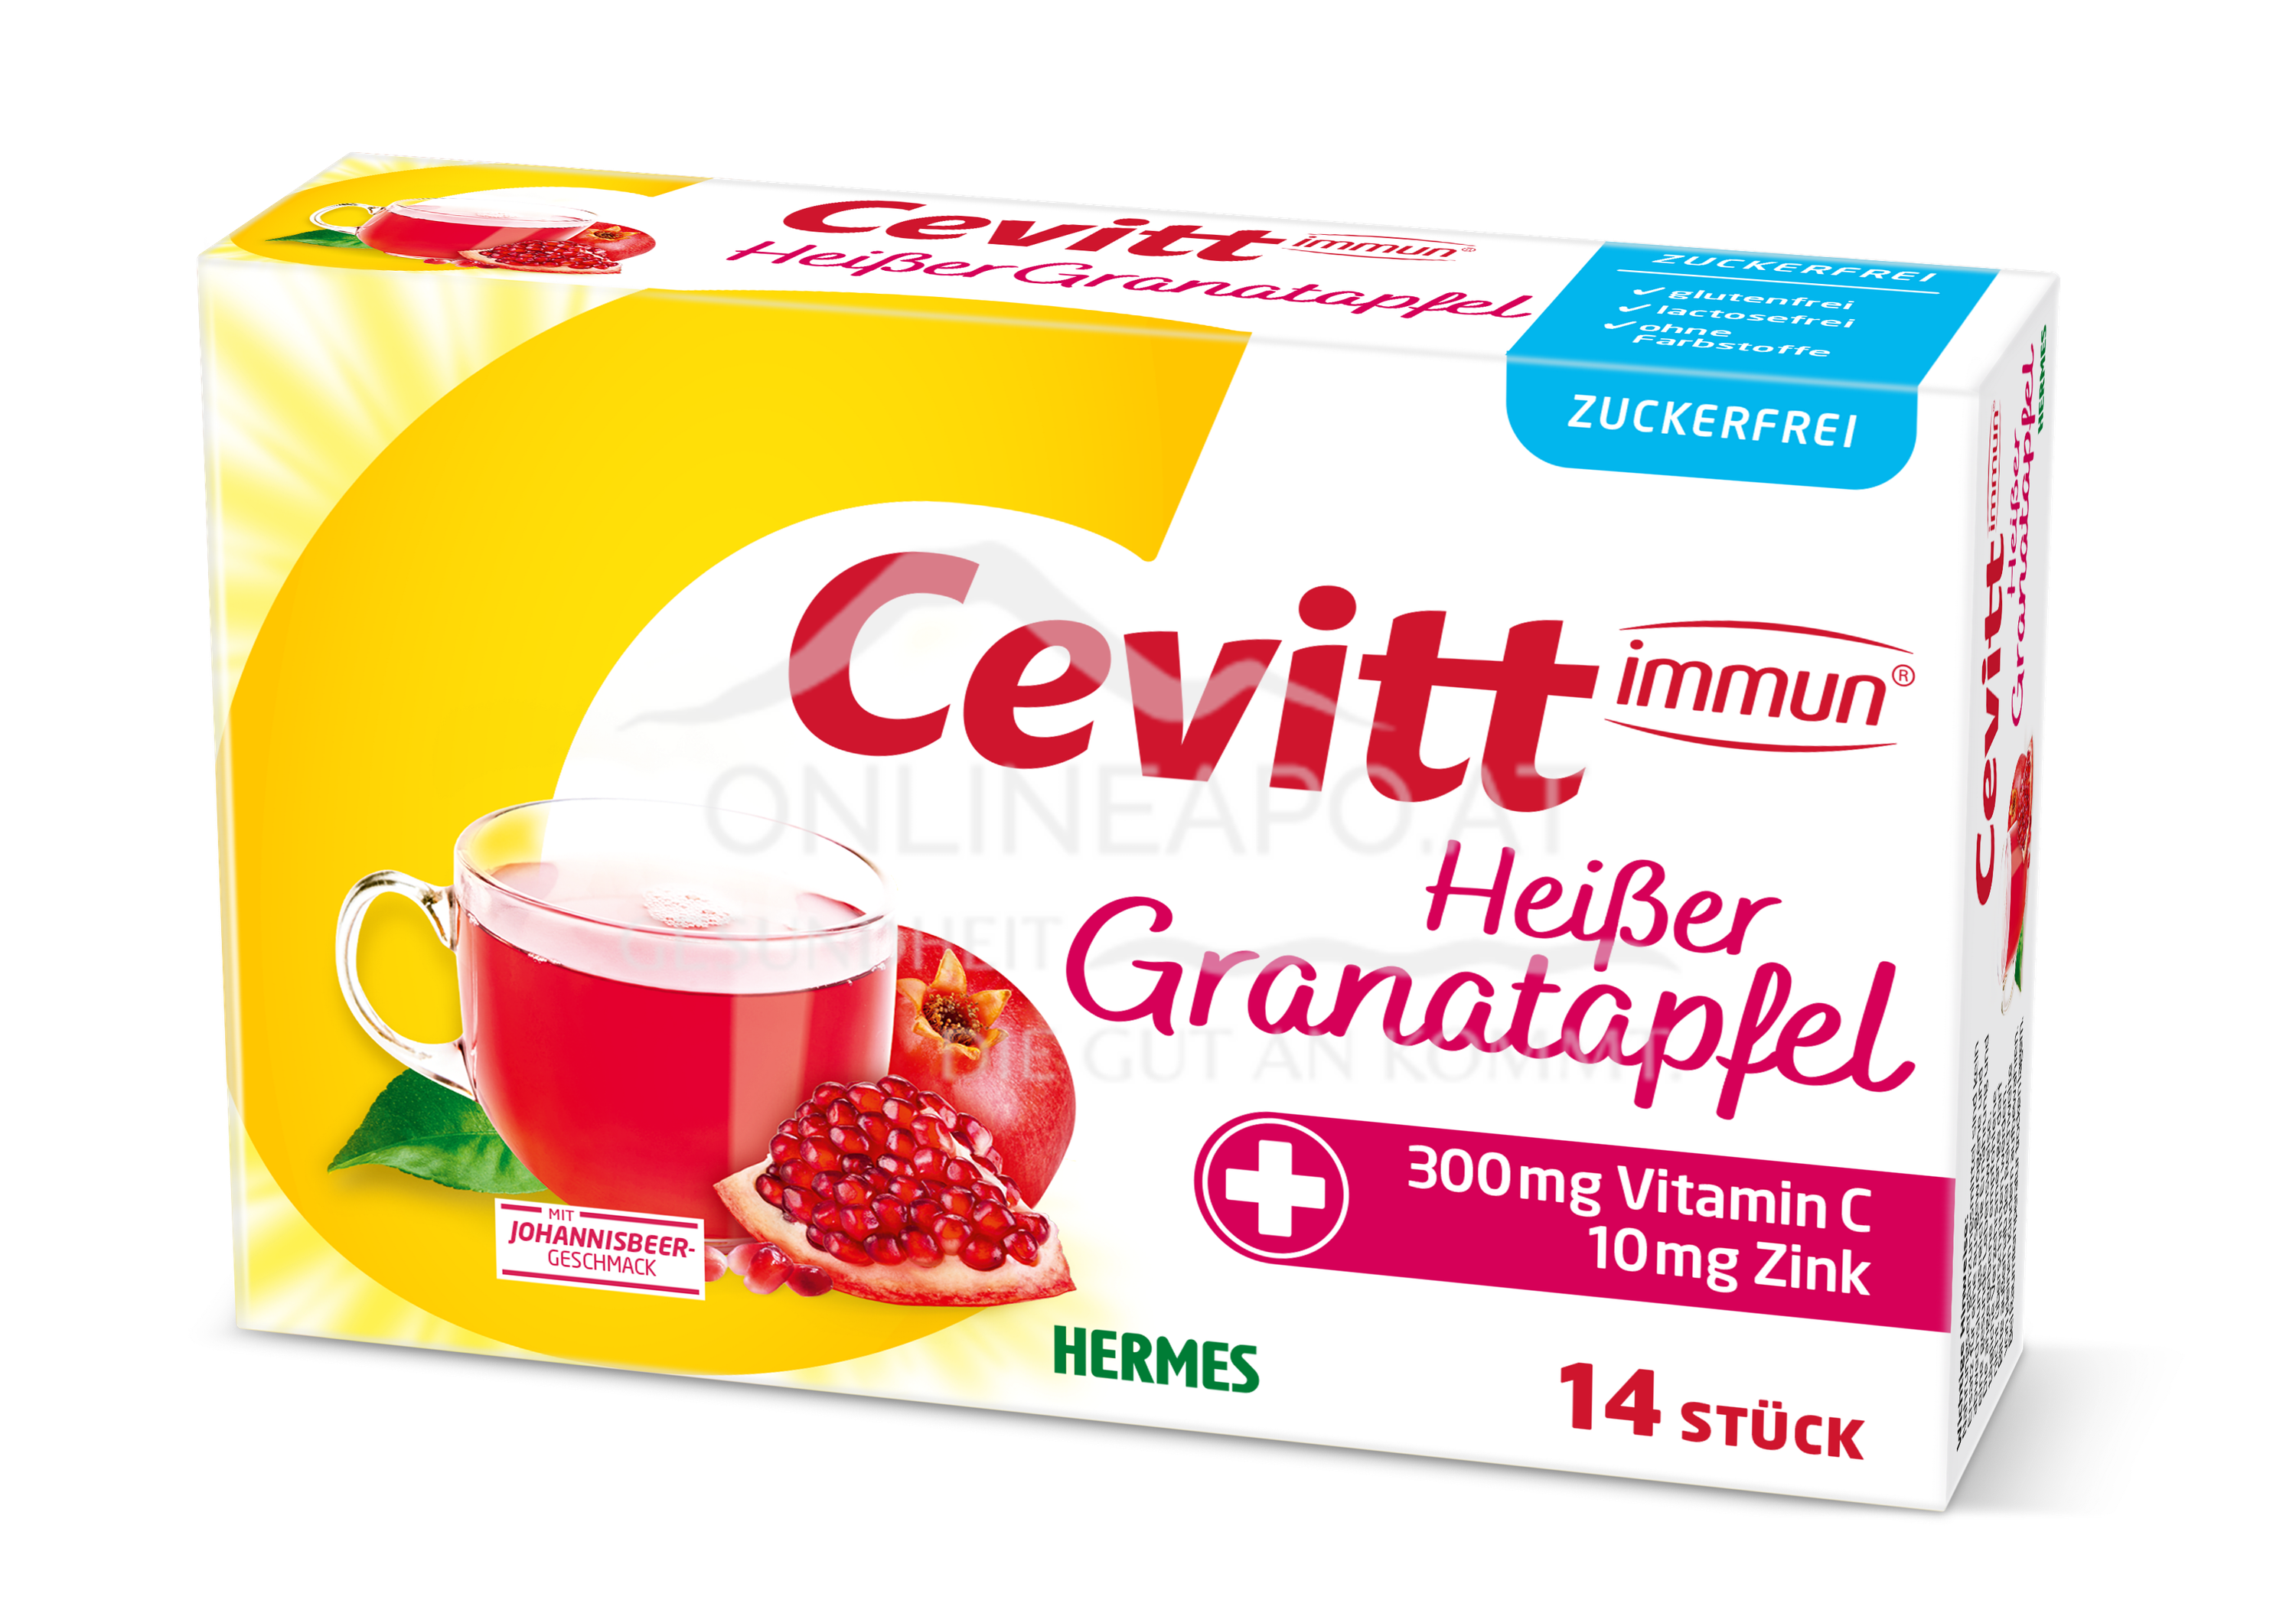 Cevitt immun® Heißer Granatapfel zuckerfrei